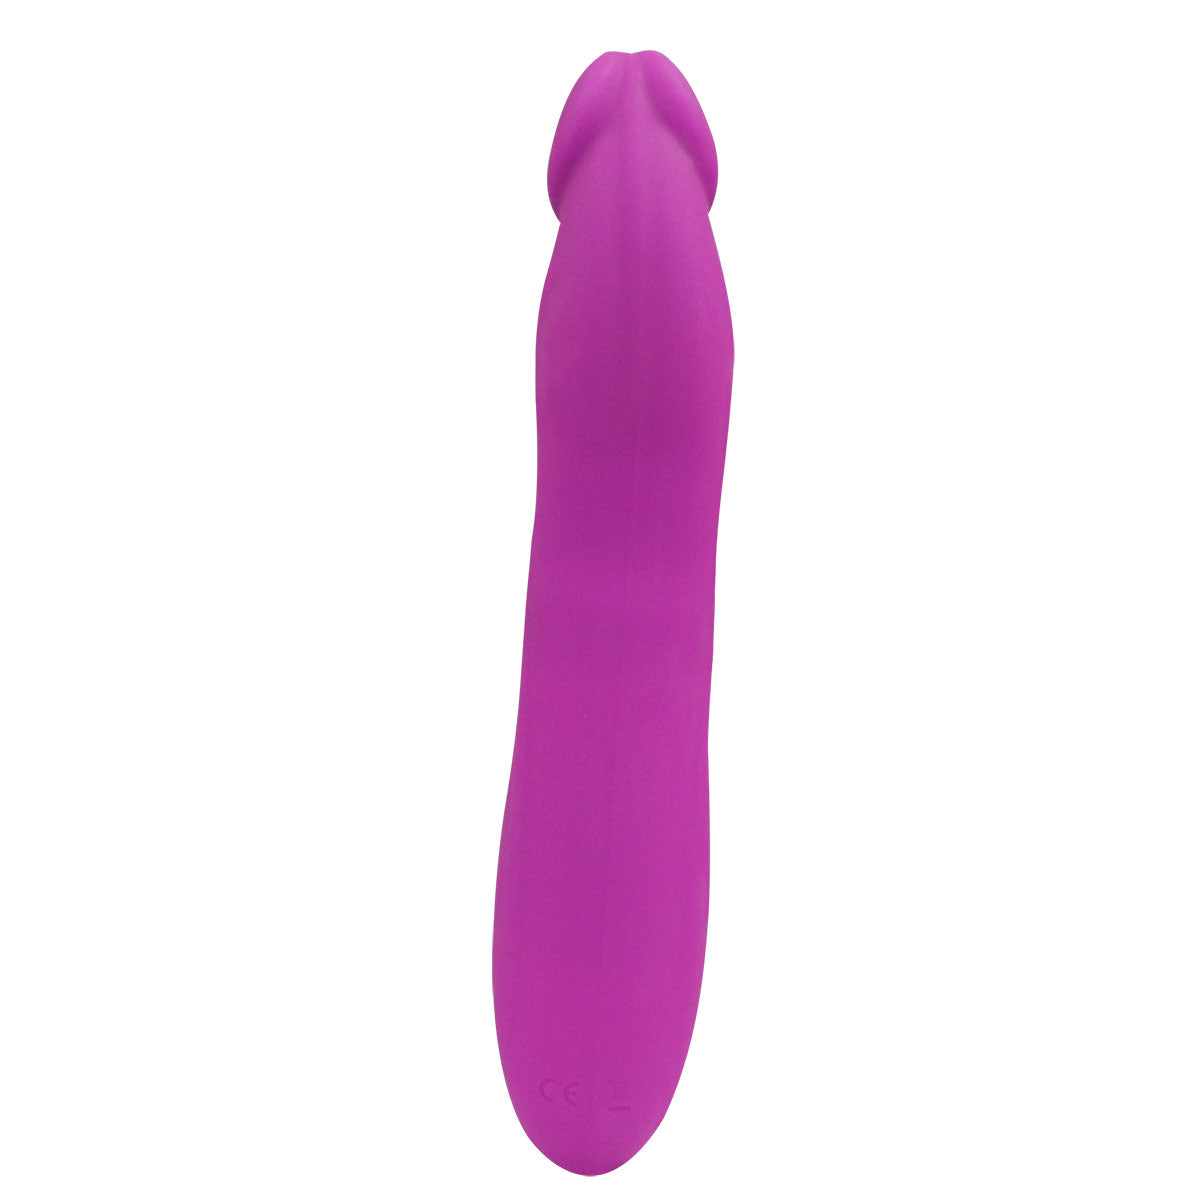 Femme Funn Booster Rabbit - Purple Intimates Adult Boutique